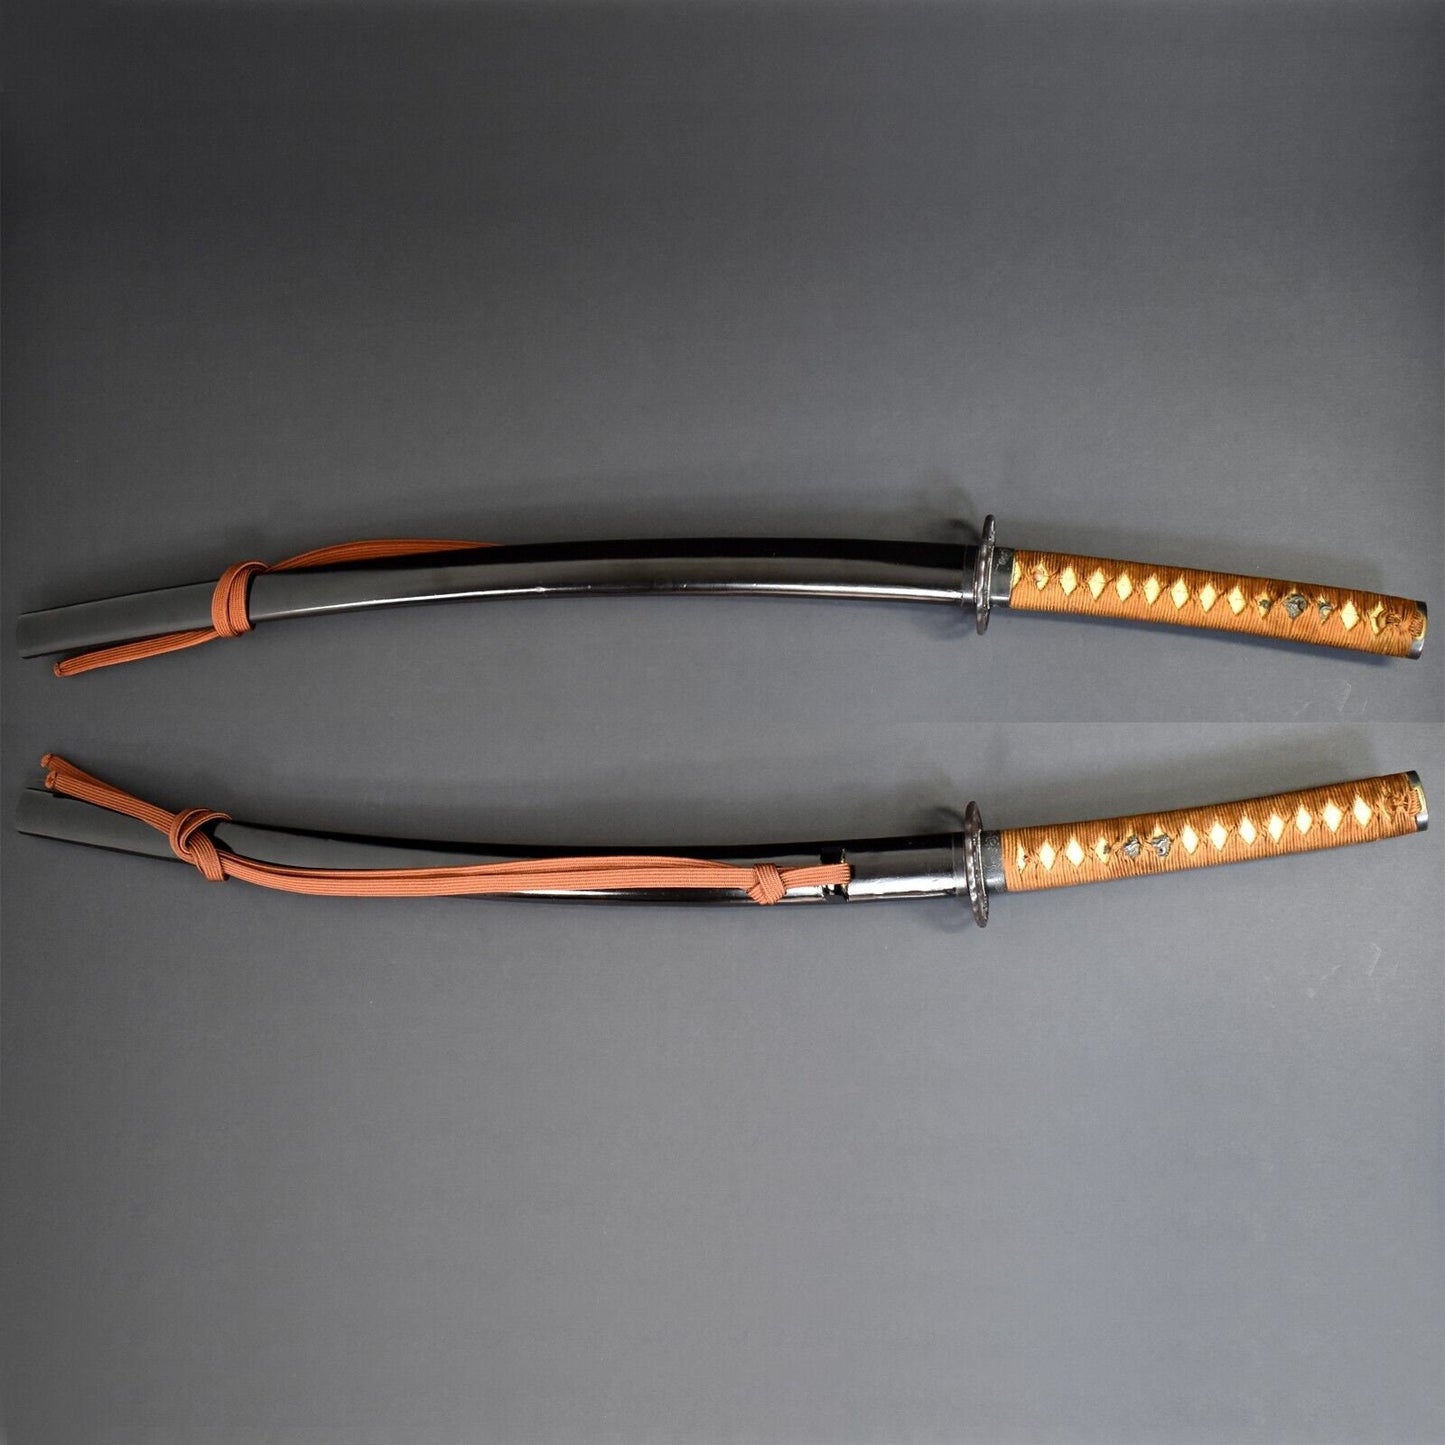 Muromachi Era Genuine Ancient Nihonto Japanese Long Sword Katana Blade Original Vintage Antique Asian Weapon Rare Collectible.